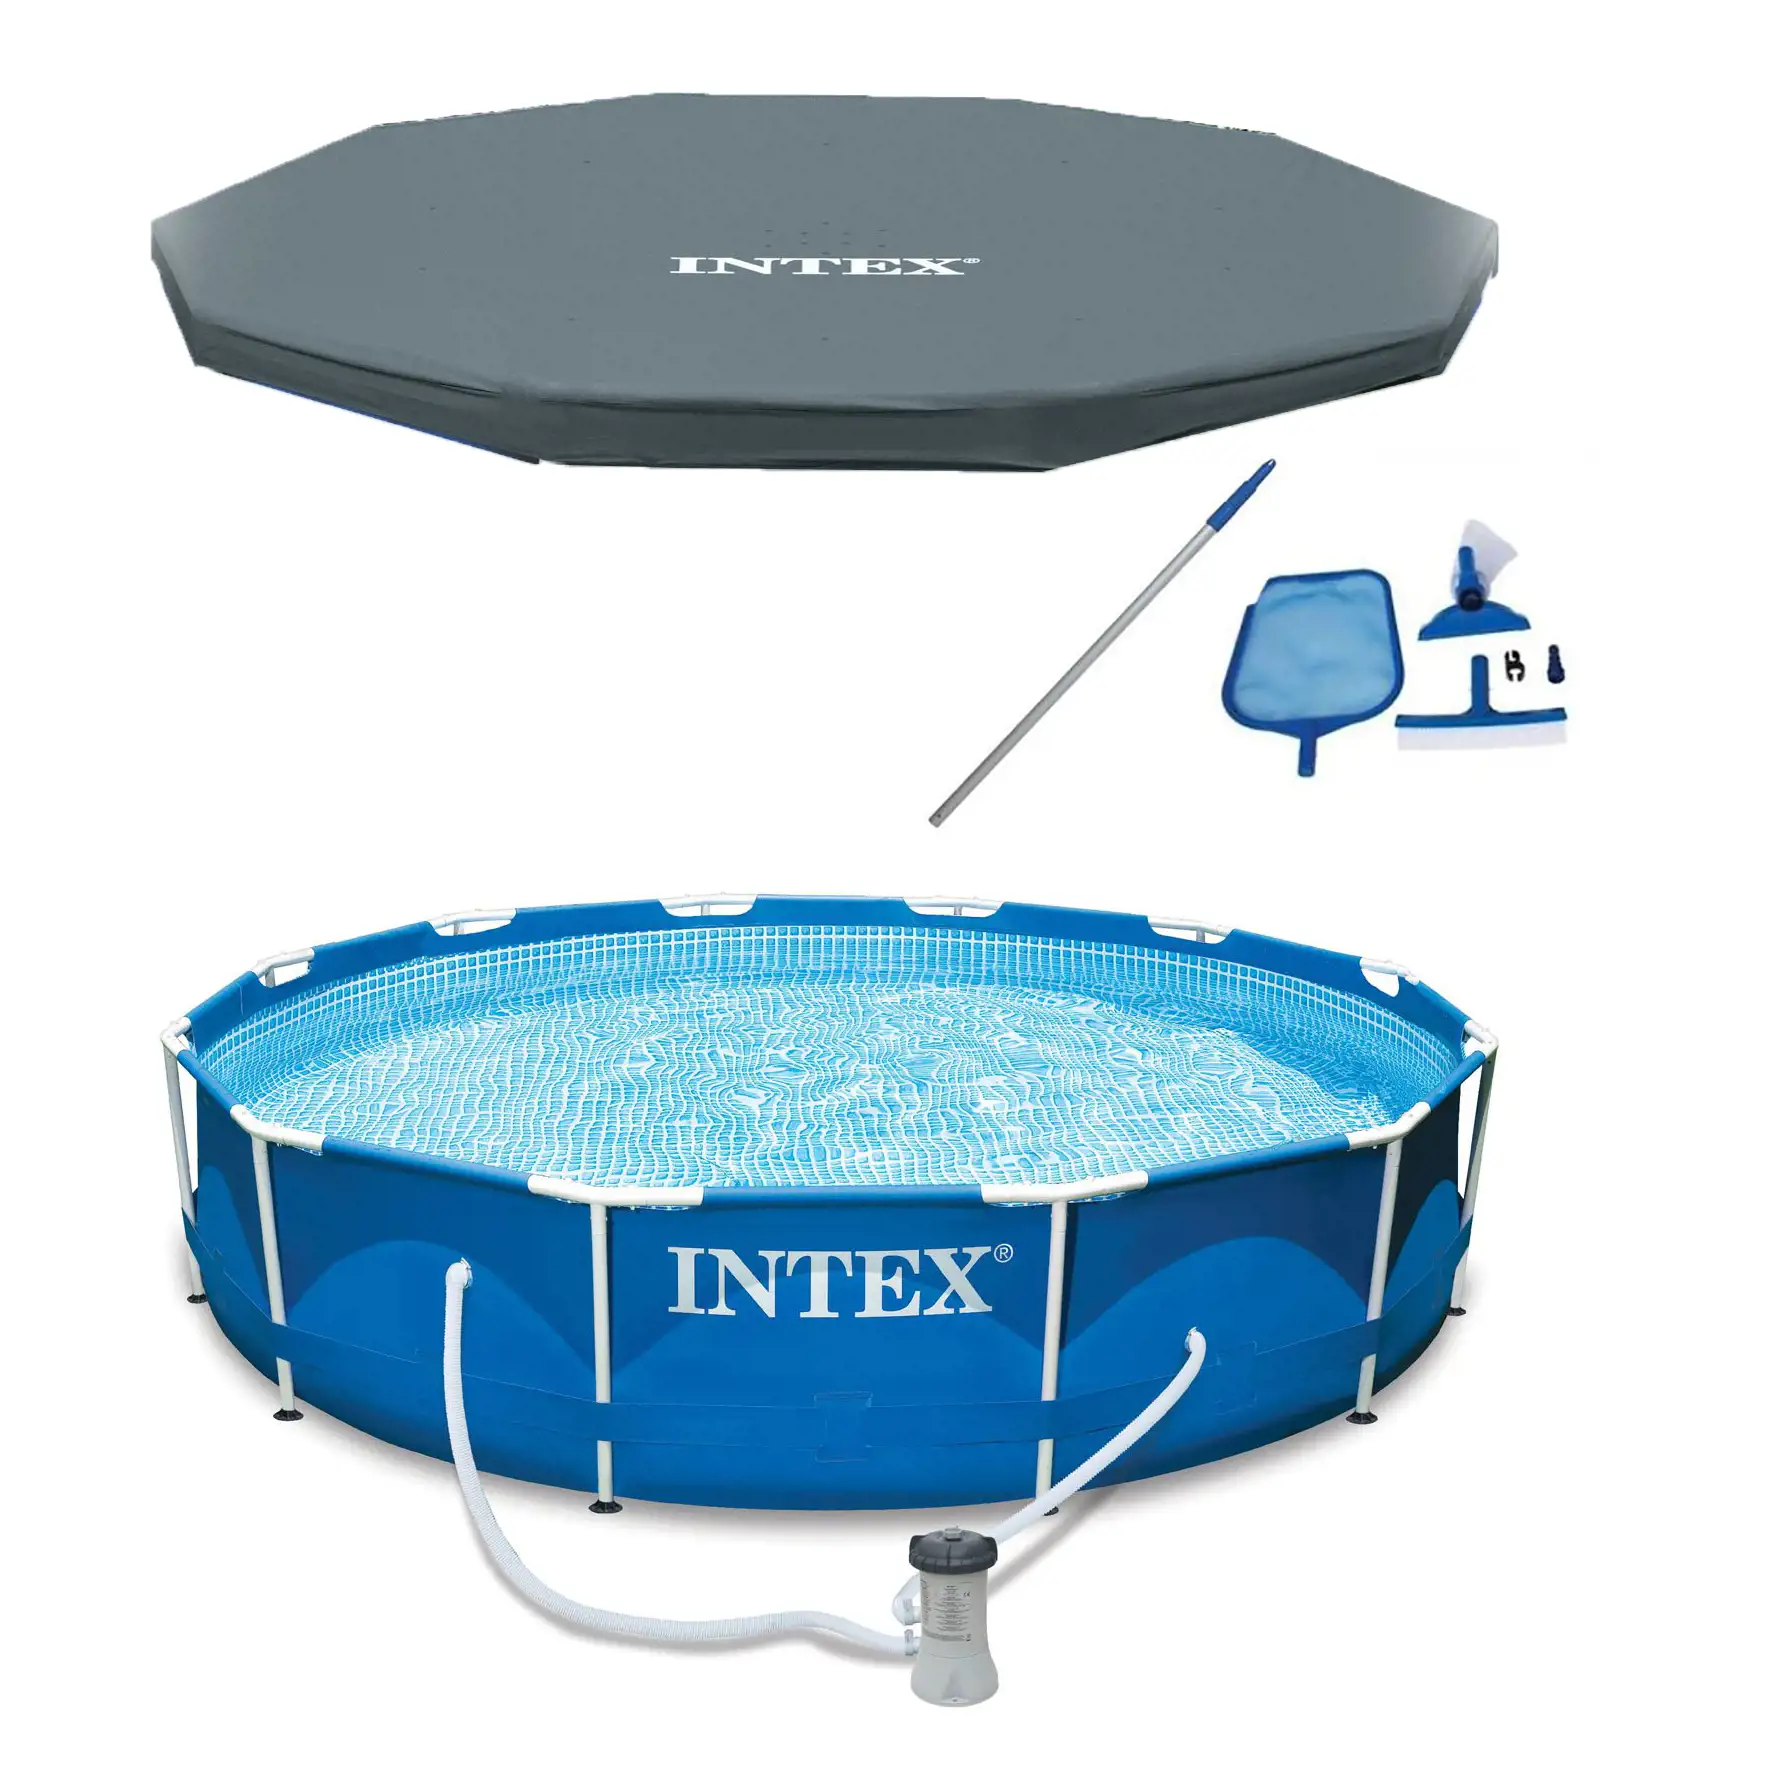 Intex 12' x 30" Round Metal Frame Above Pool, Filter, Cover, & Maintenance Kit - Walmart.com